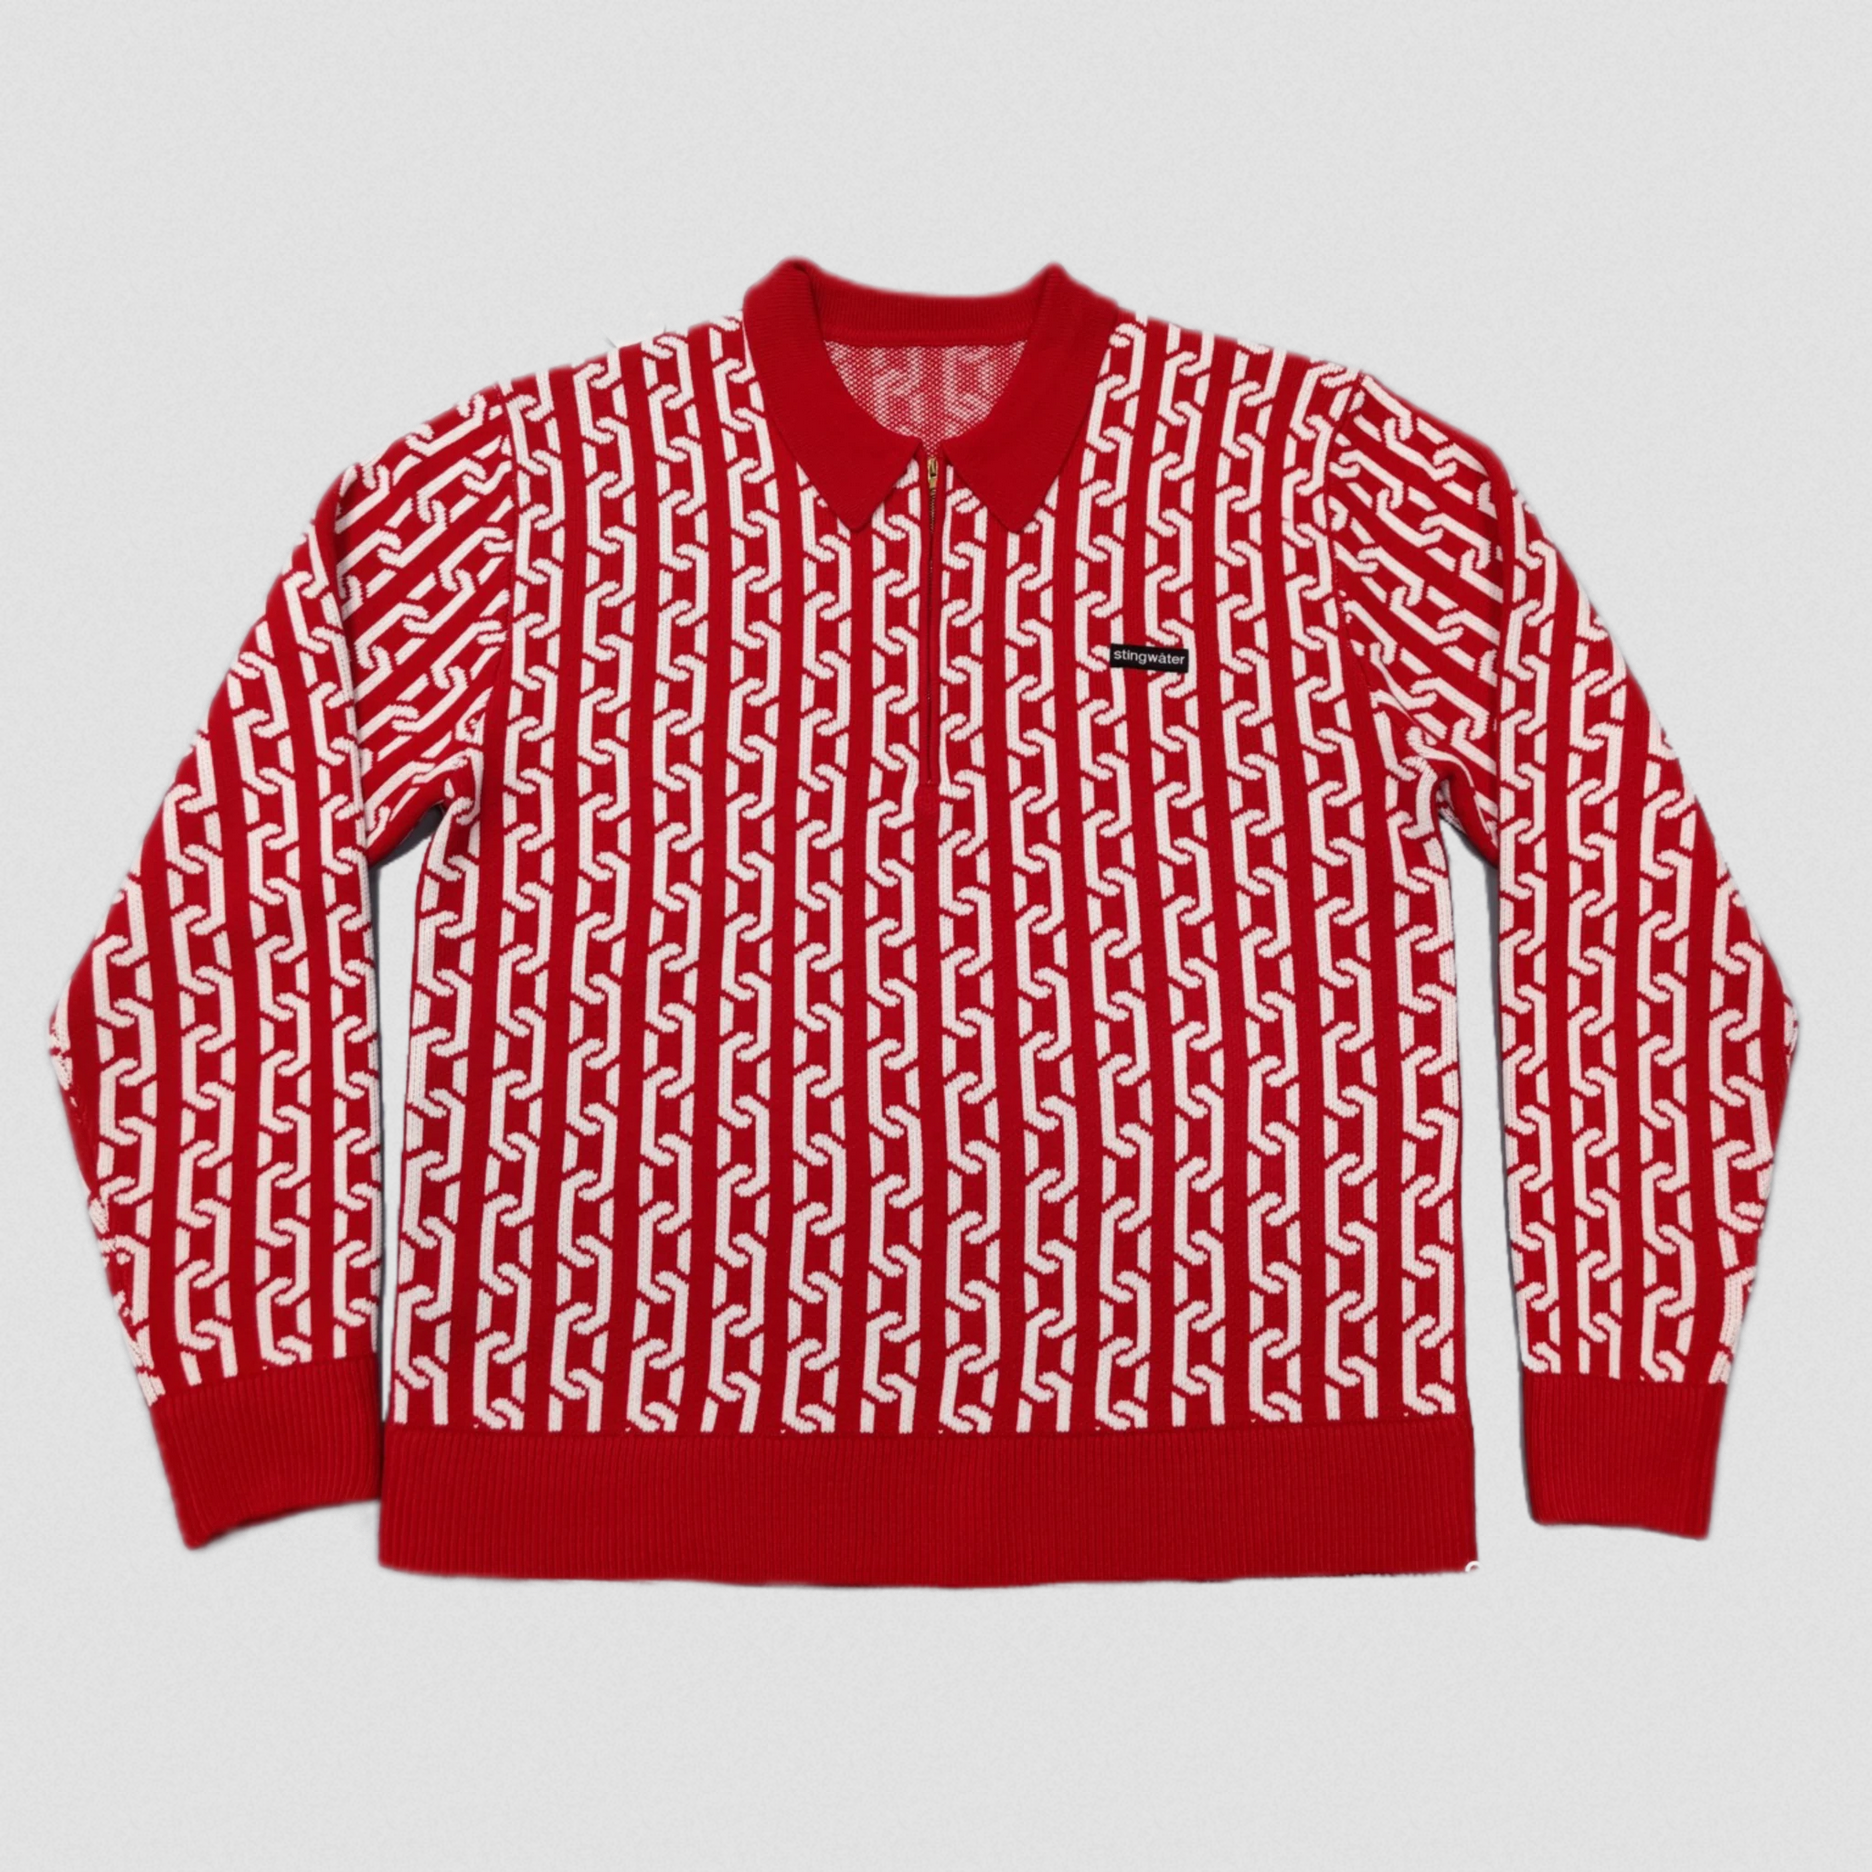 Stingwater Chain Collared Half Zip Sweater Red